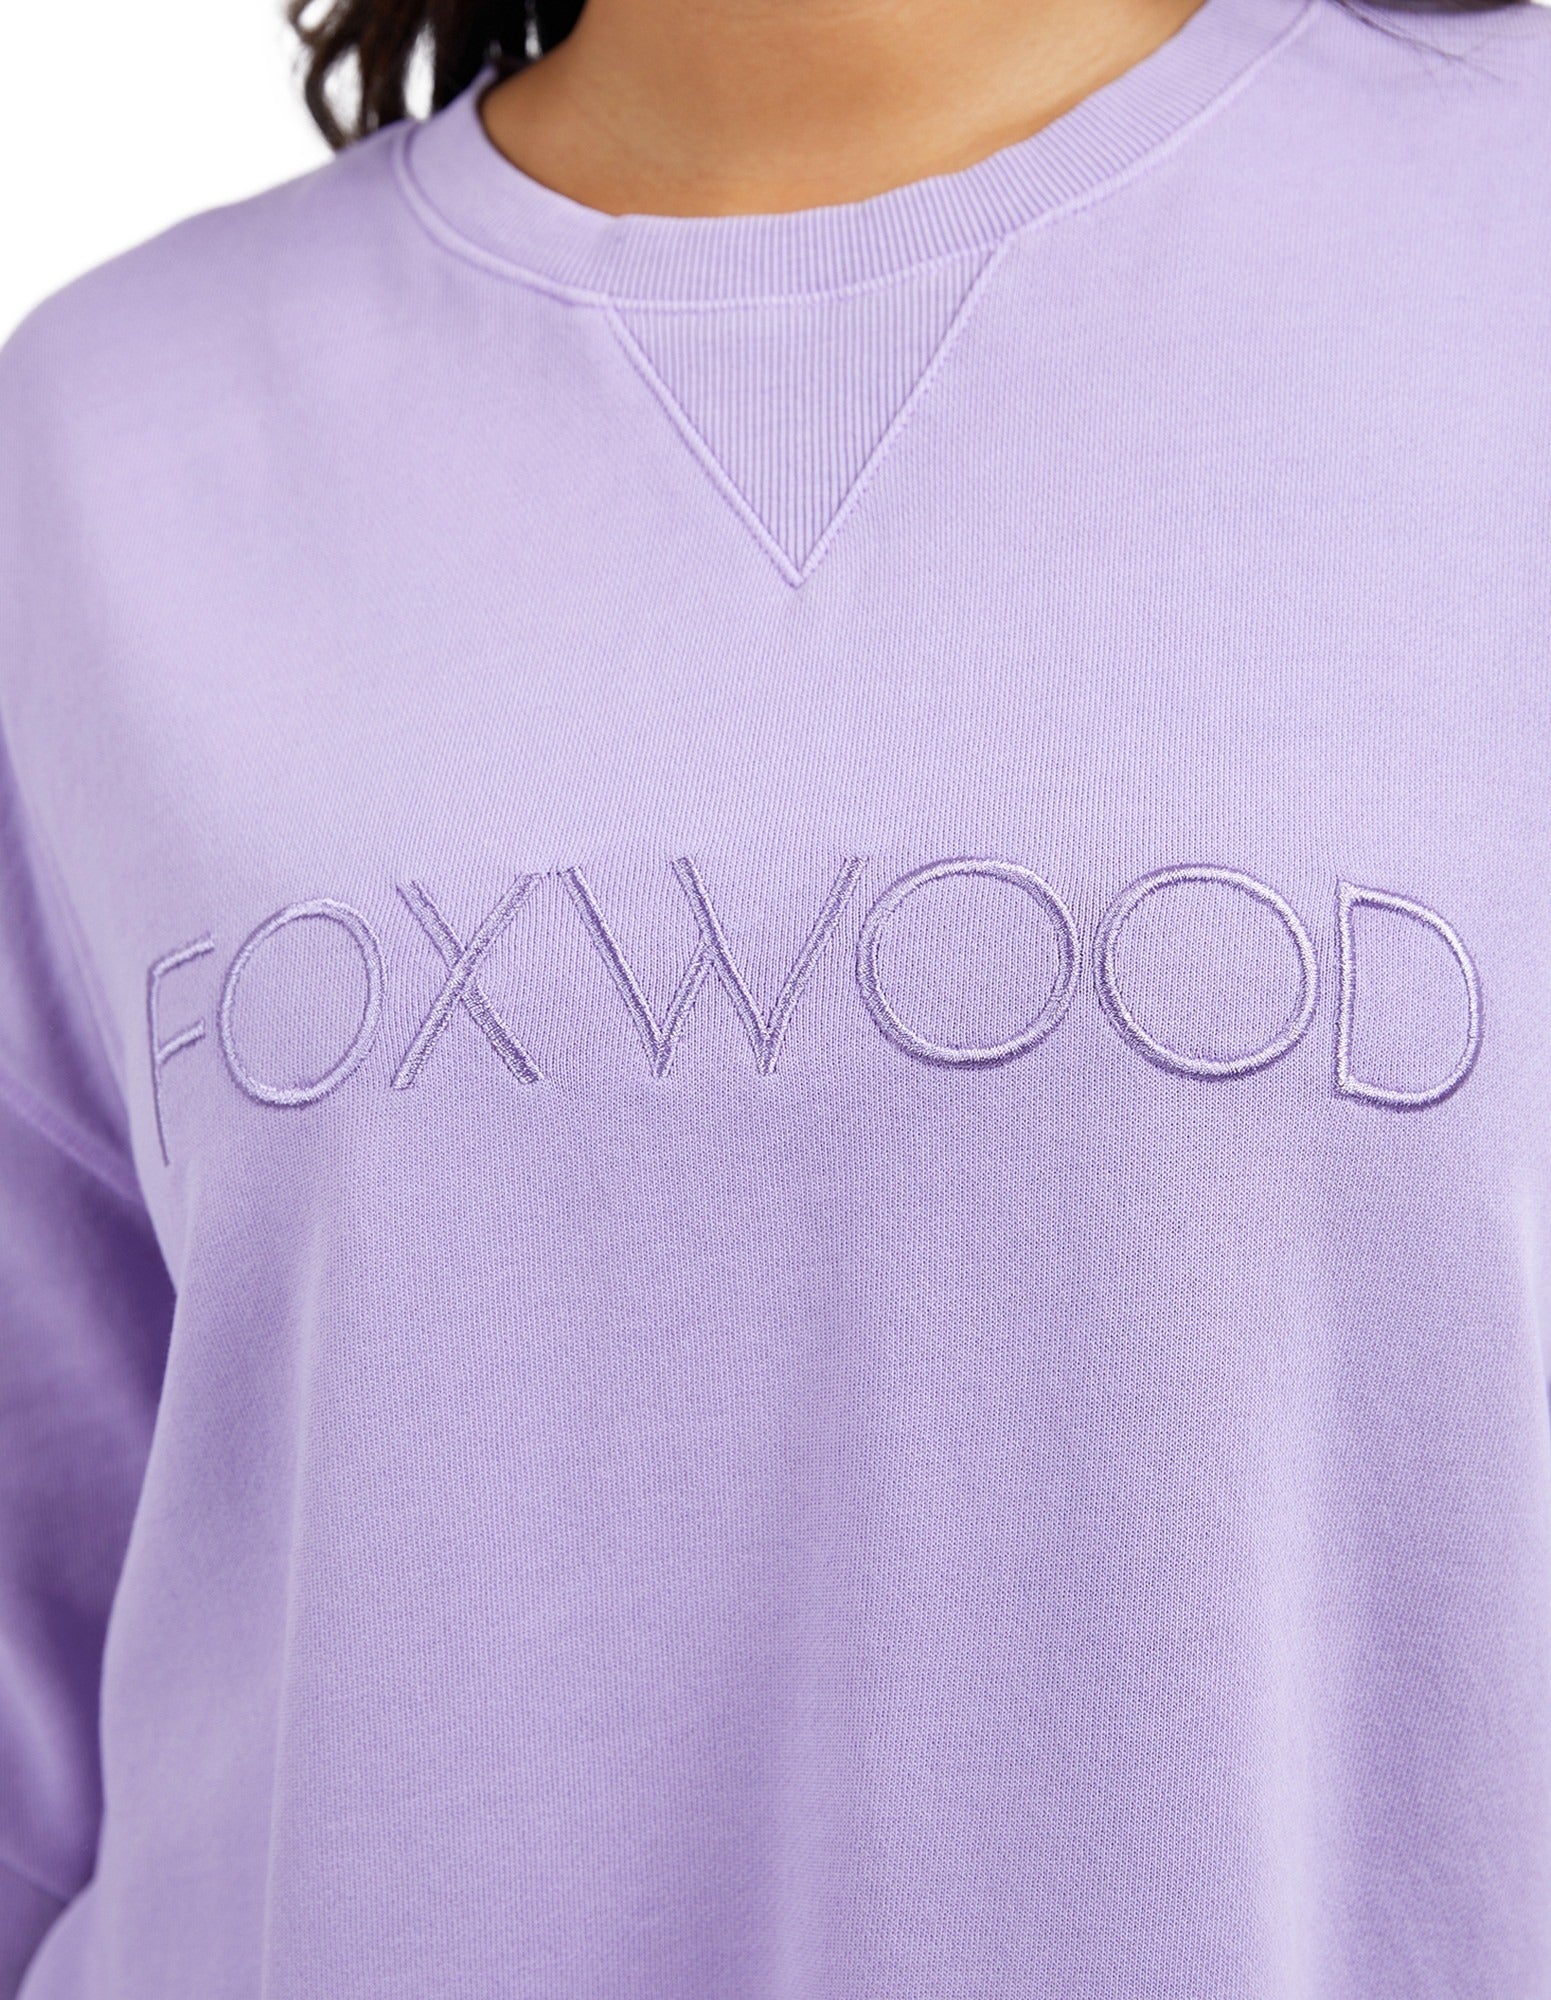 Foxwood Simplified Crew - Lavender